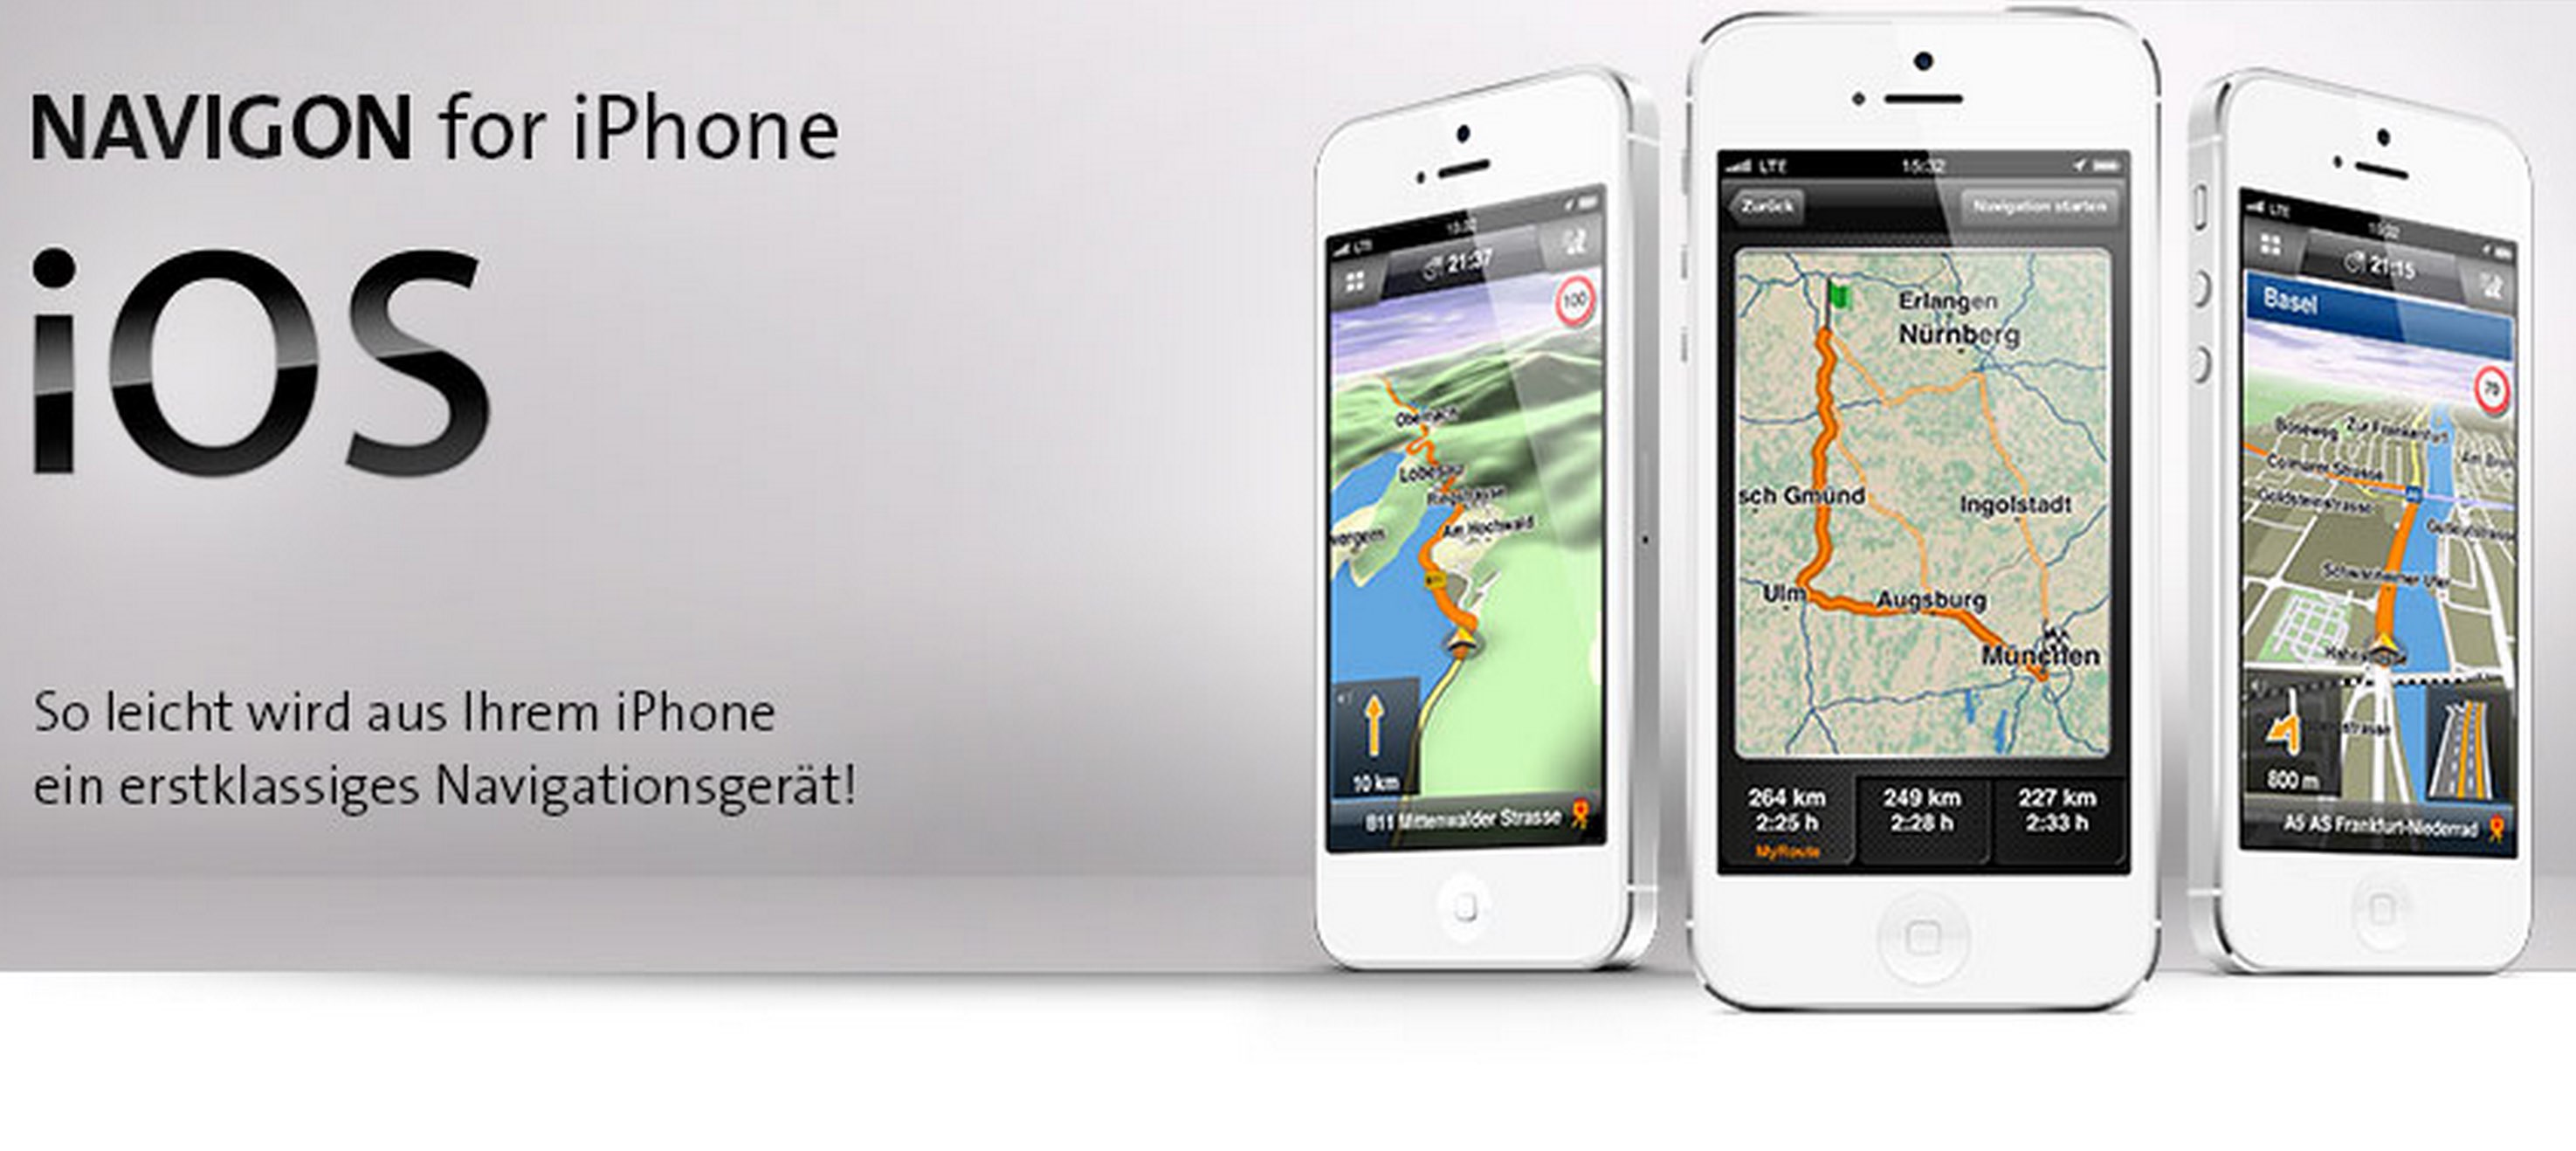 Navigon für iPhone 6 & iPhone 6 Plus angepasst 9